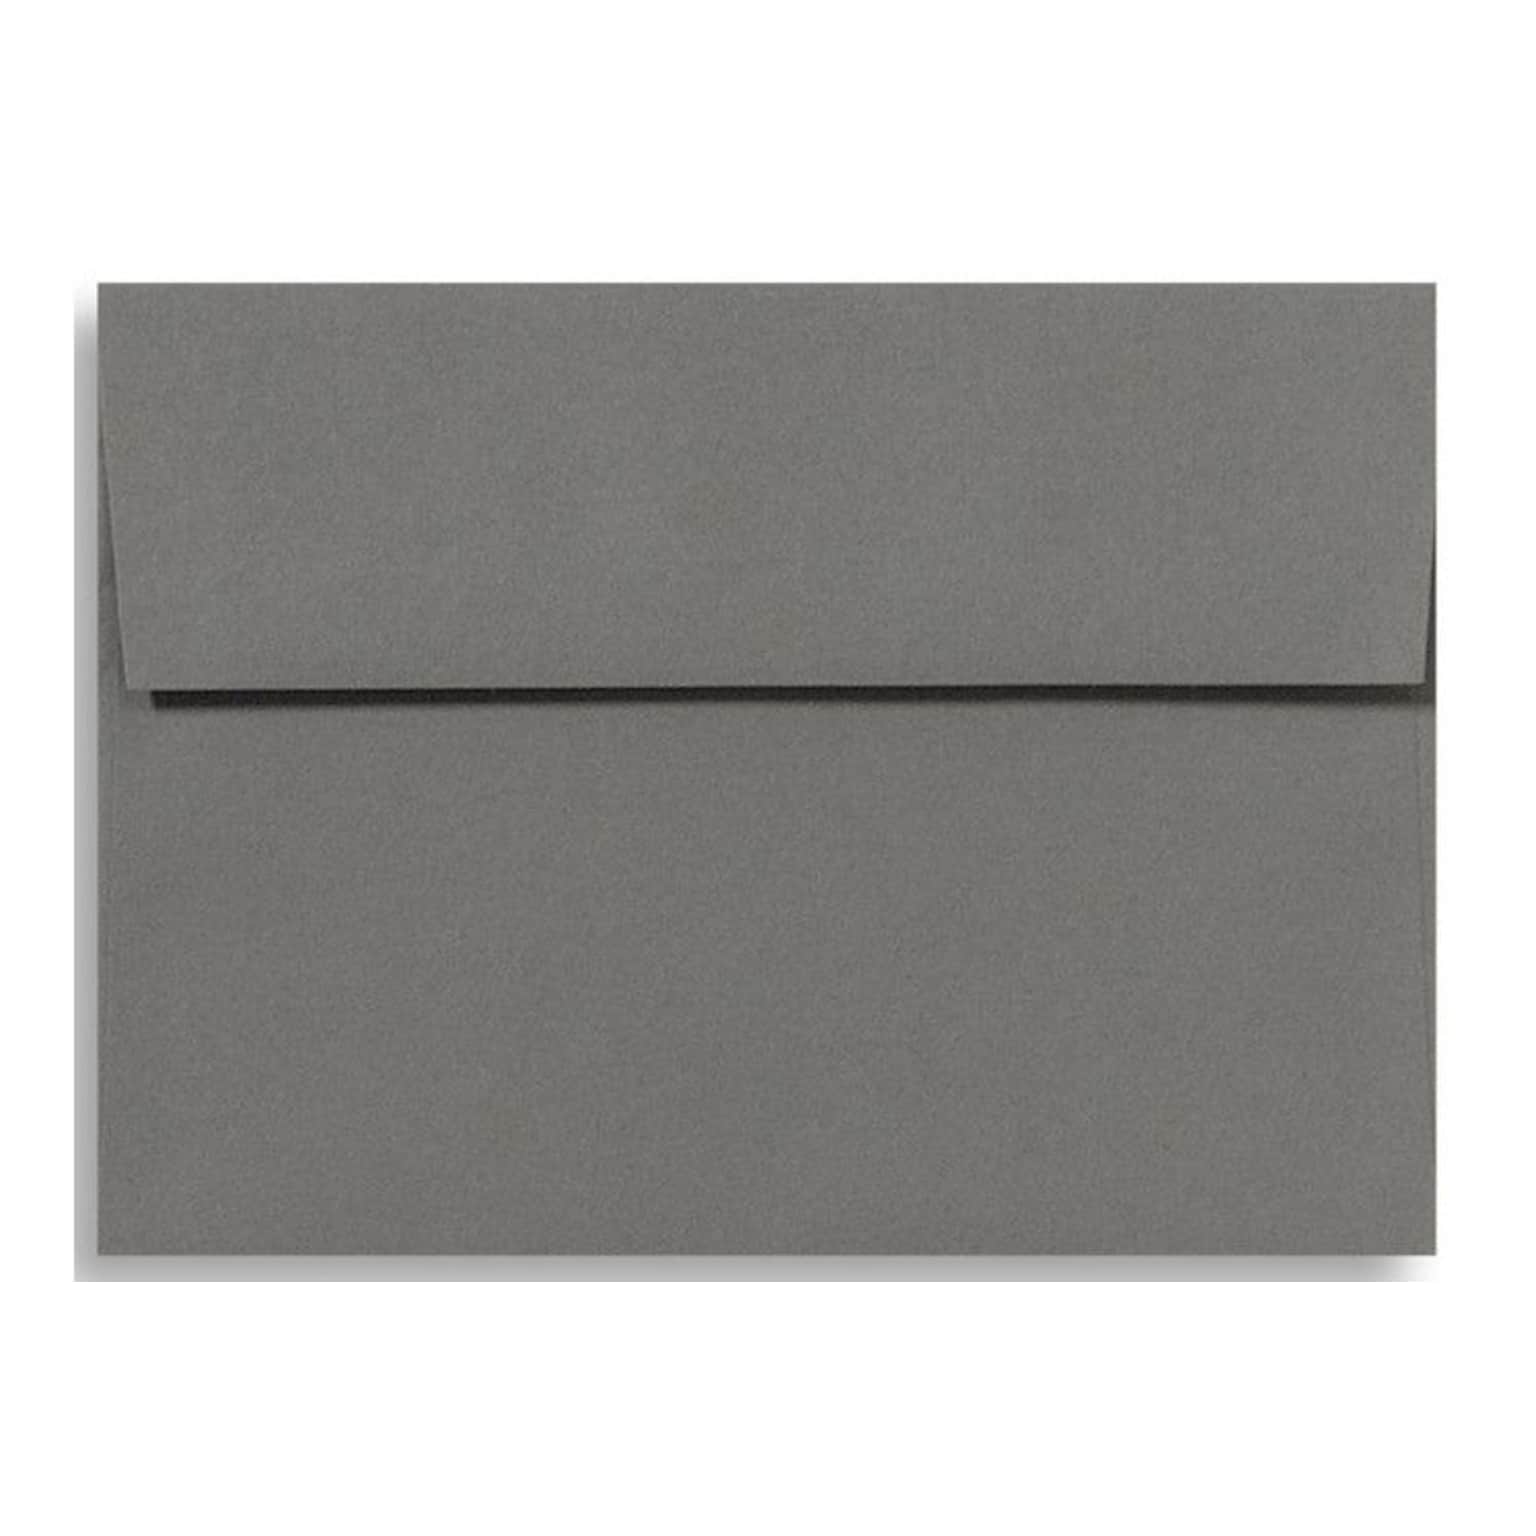 LUX 5 3/4 x 8 3/4 70lbs. A9 Invitation Envelopes W/Glue, Smoke Gray, 50/Pack